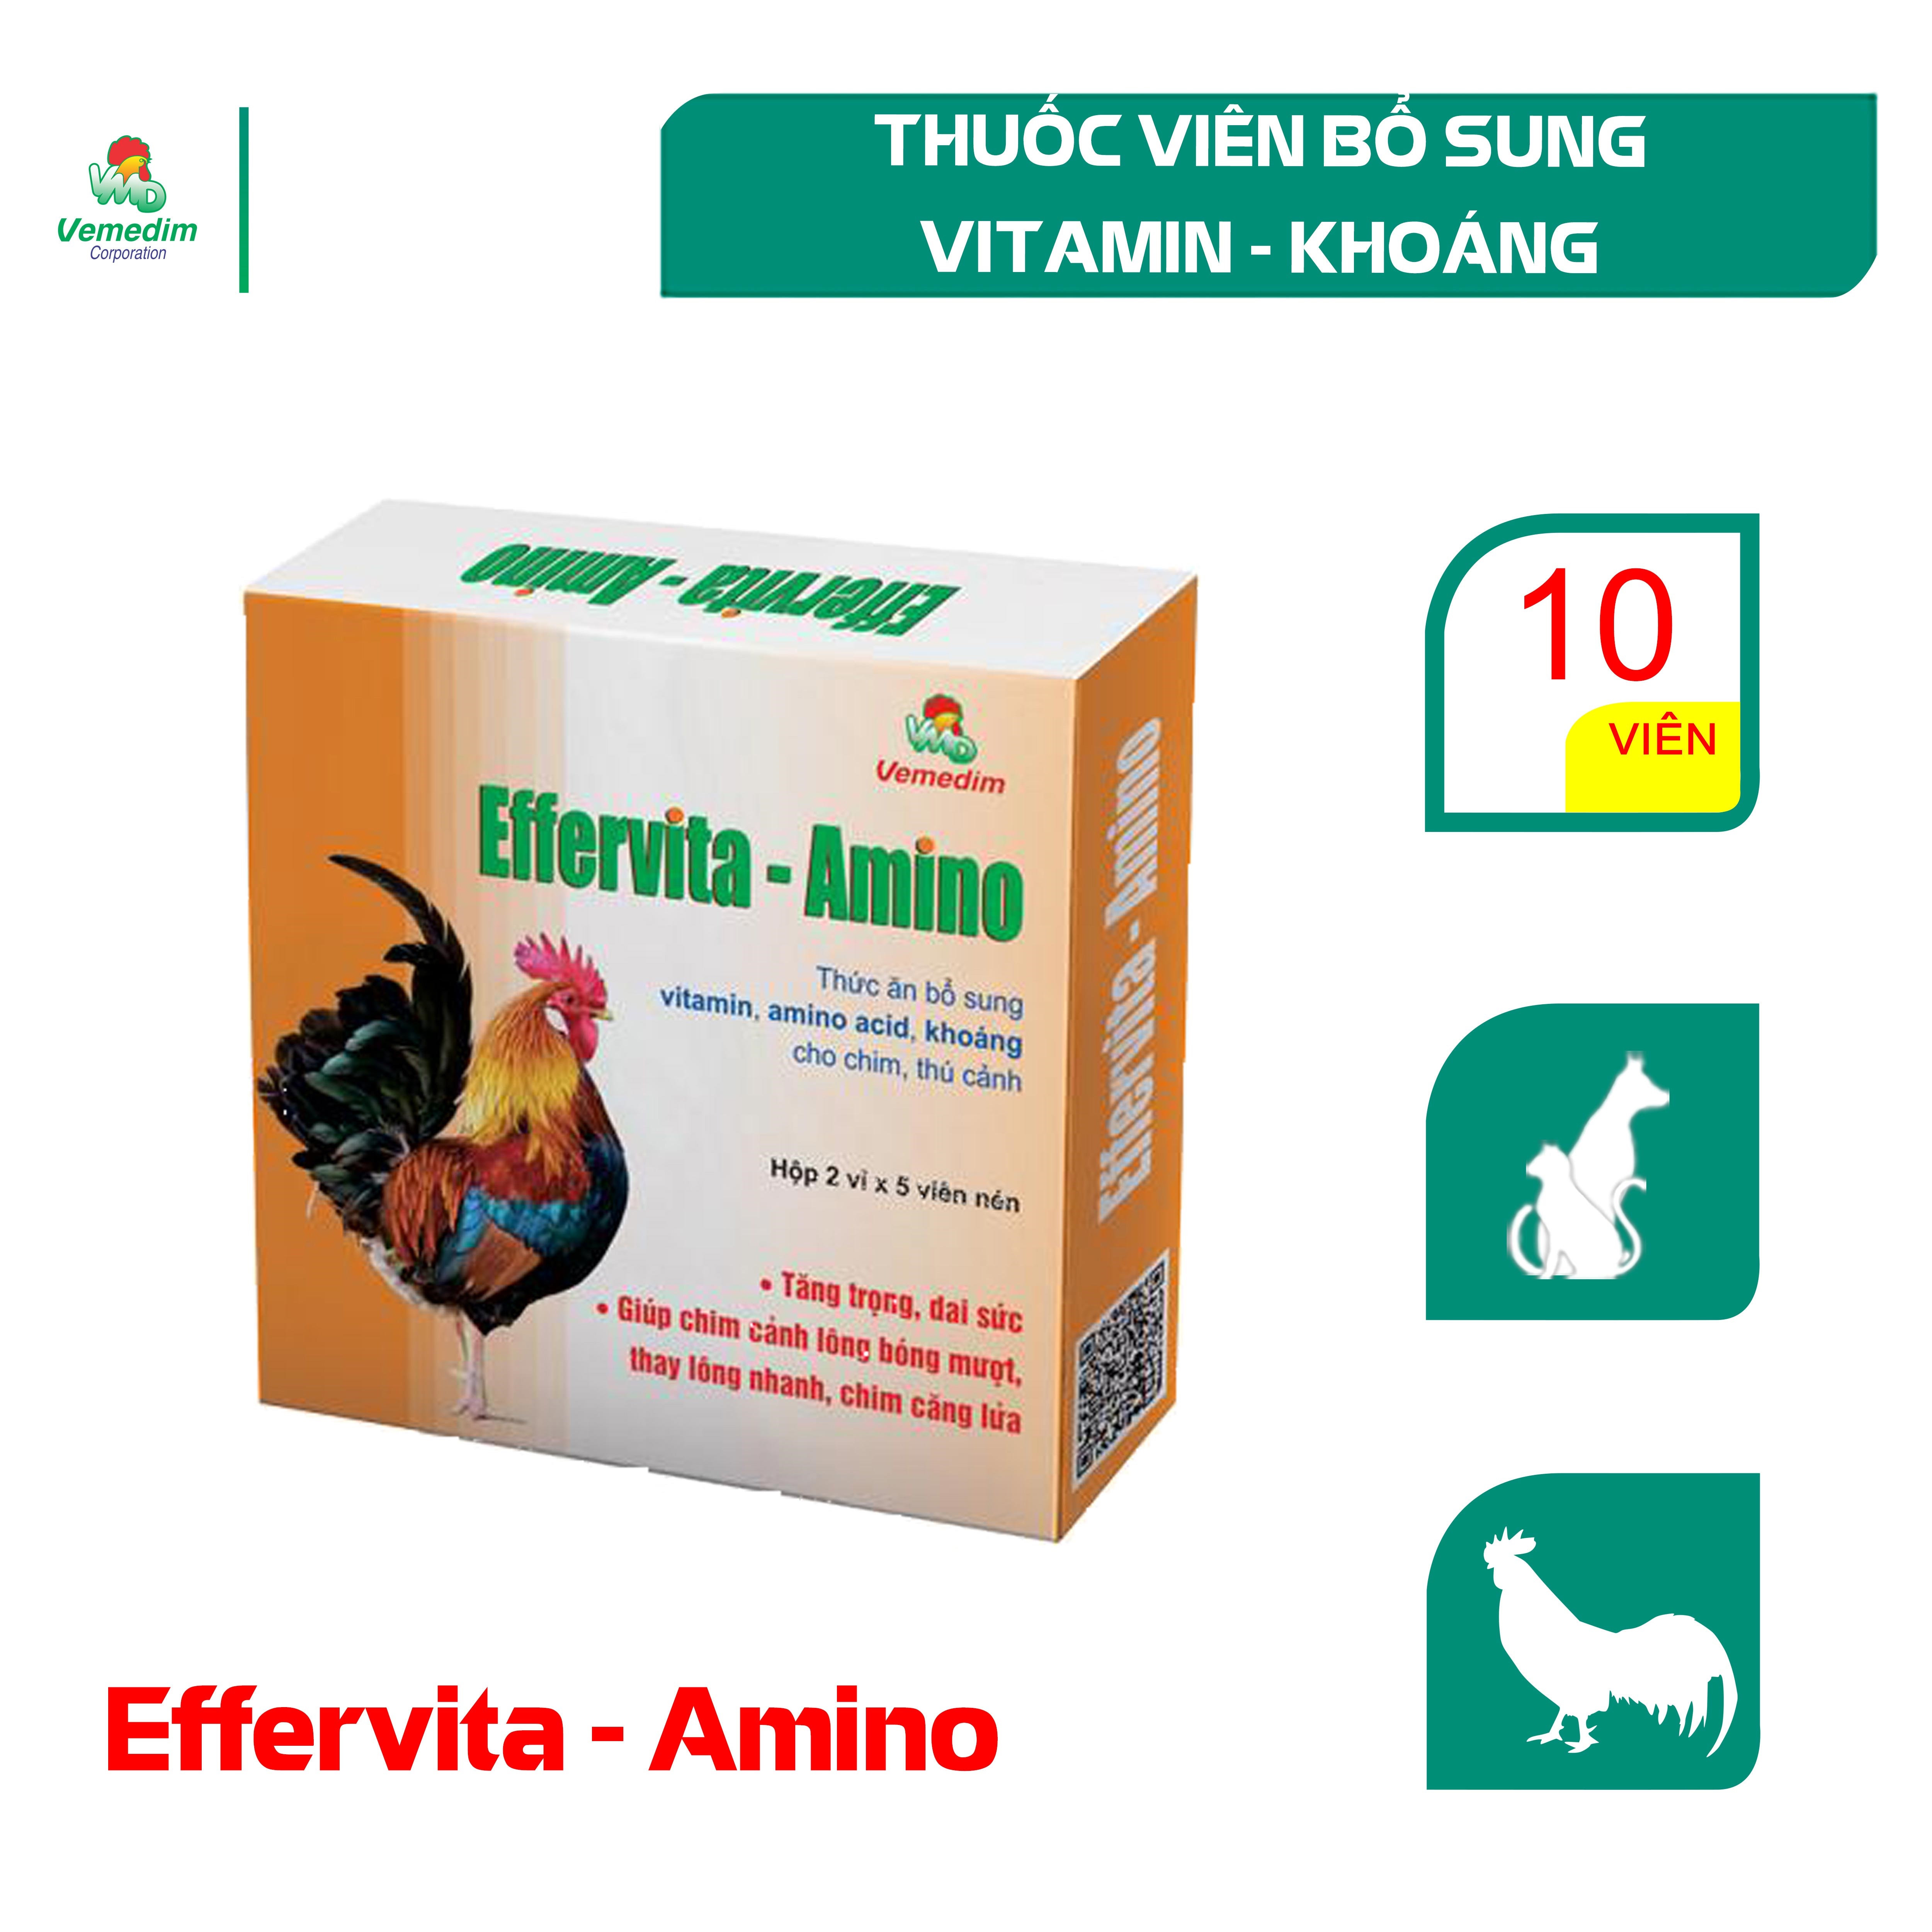 Vemedim Effervita-Amino bổ sung vitamin, amino acid, khoáng cho chim, thú cảnh - Hộp 10v